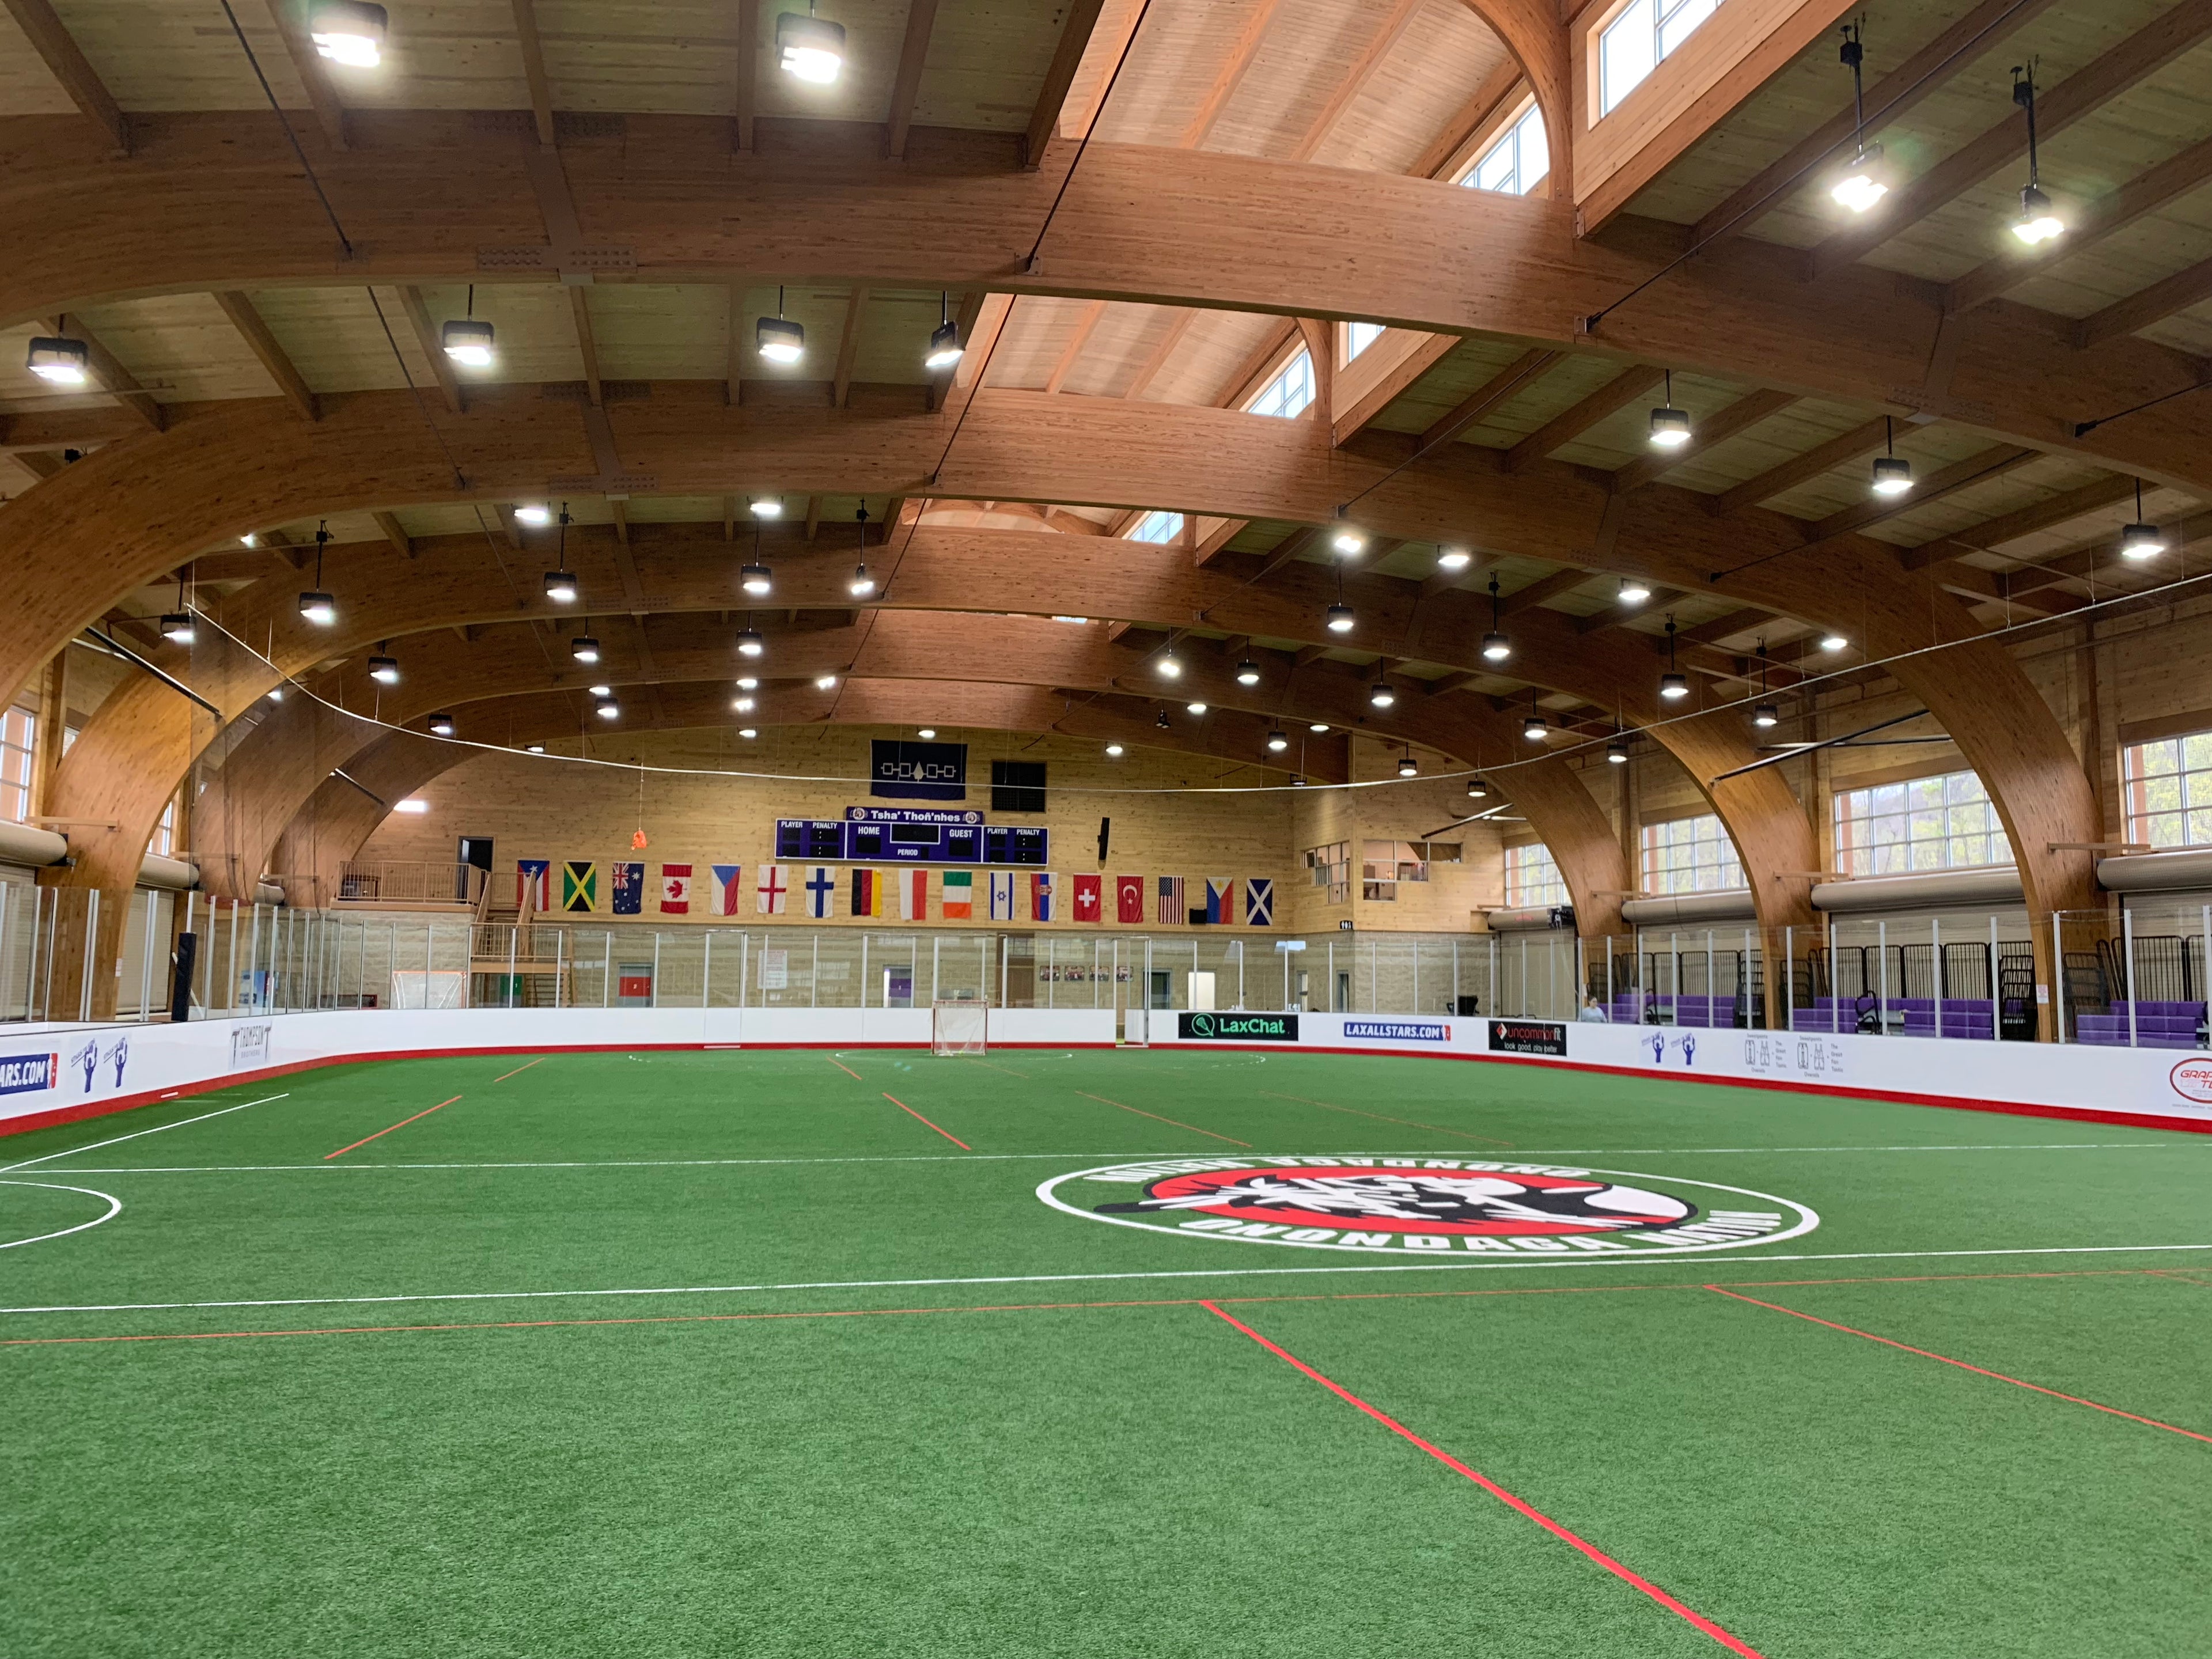 An indoor lacrosse field.